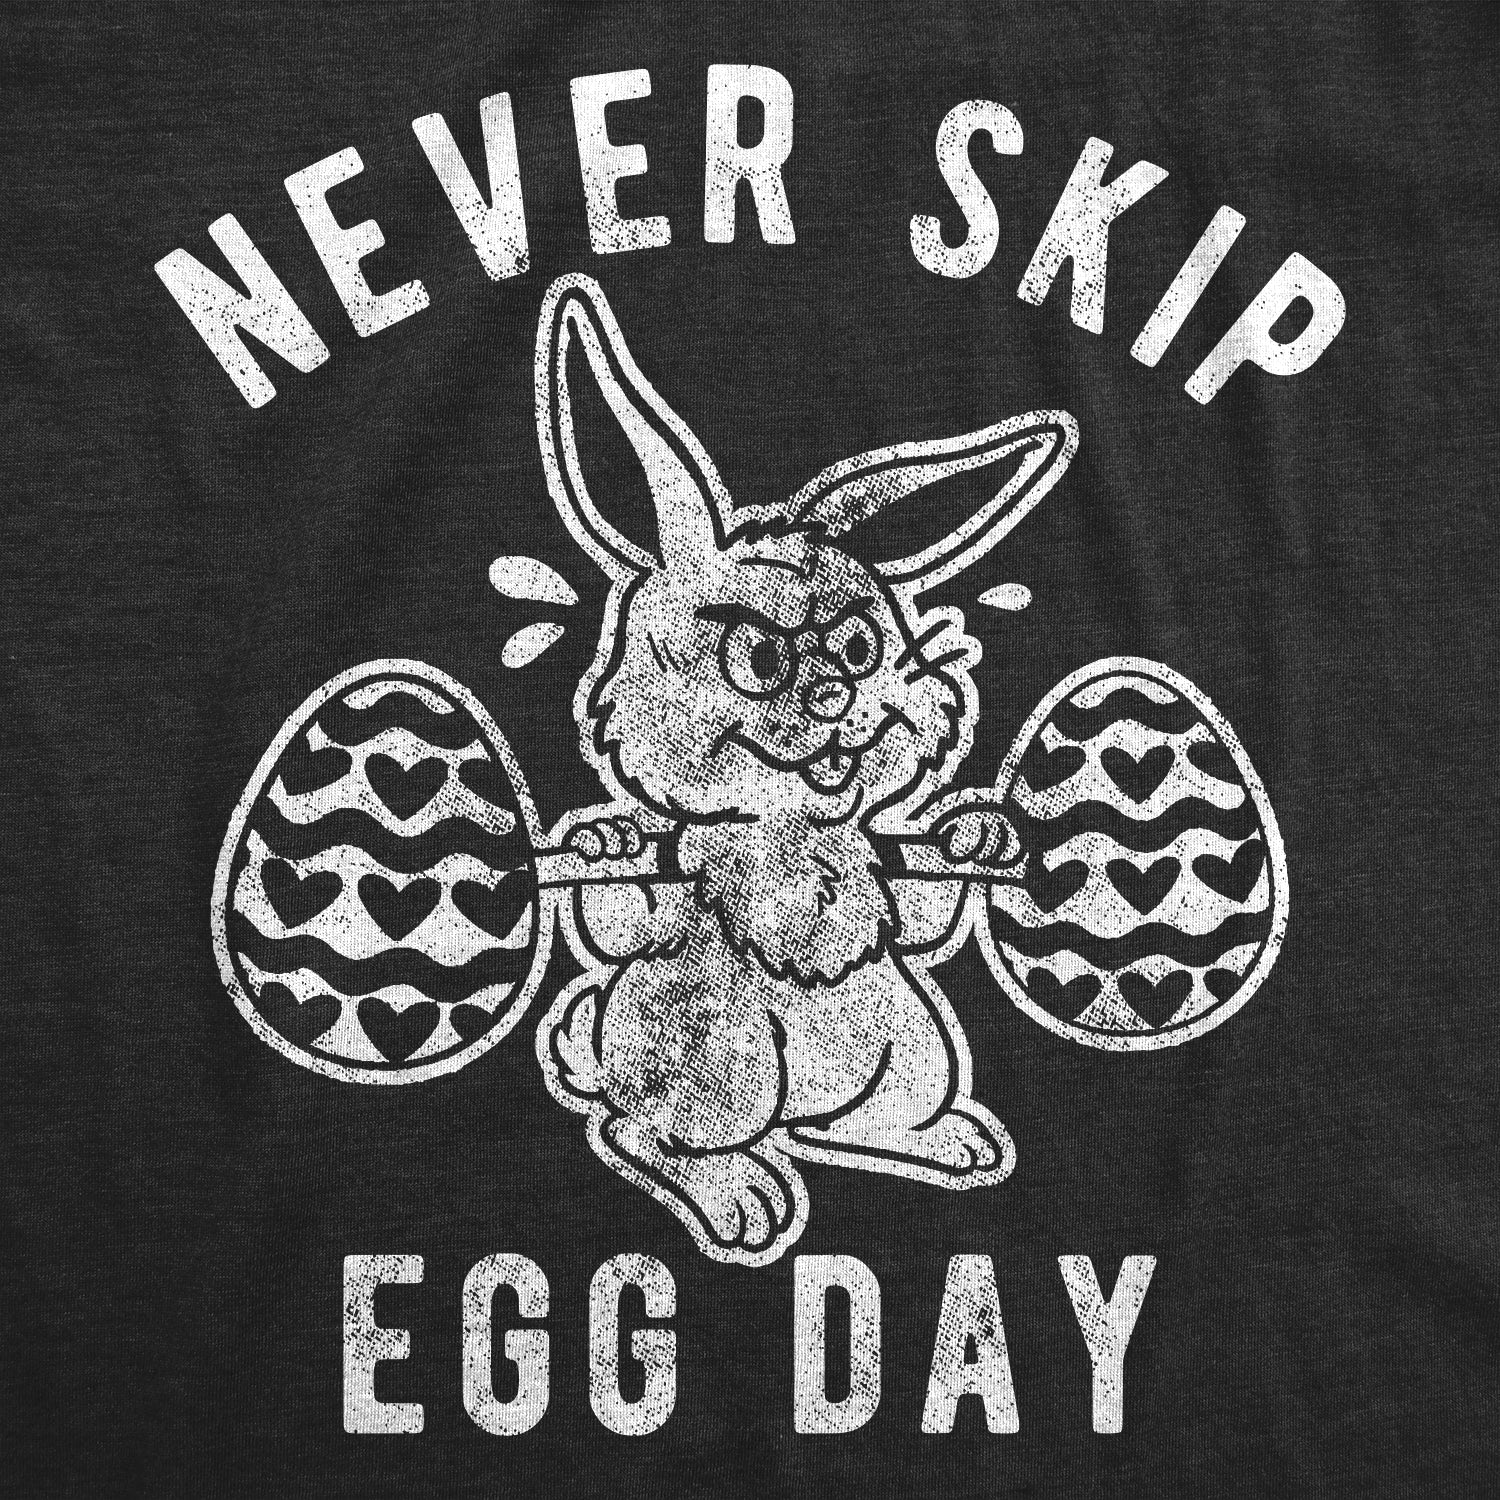 Funny Heather Black Never Skip Egg Day Mens T Shirt Nerdy Easter Fitness Tee